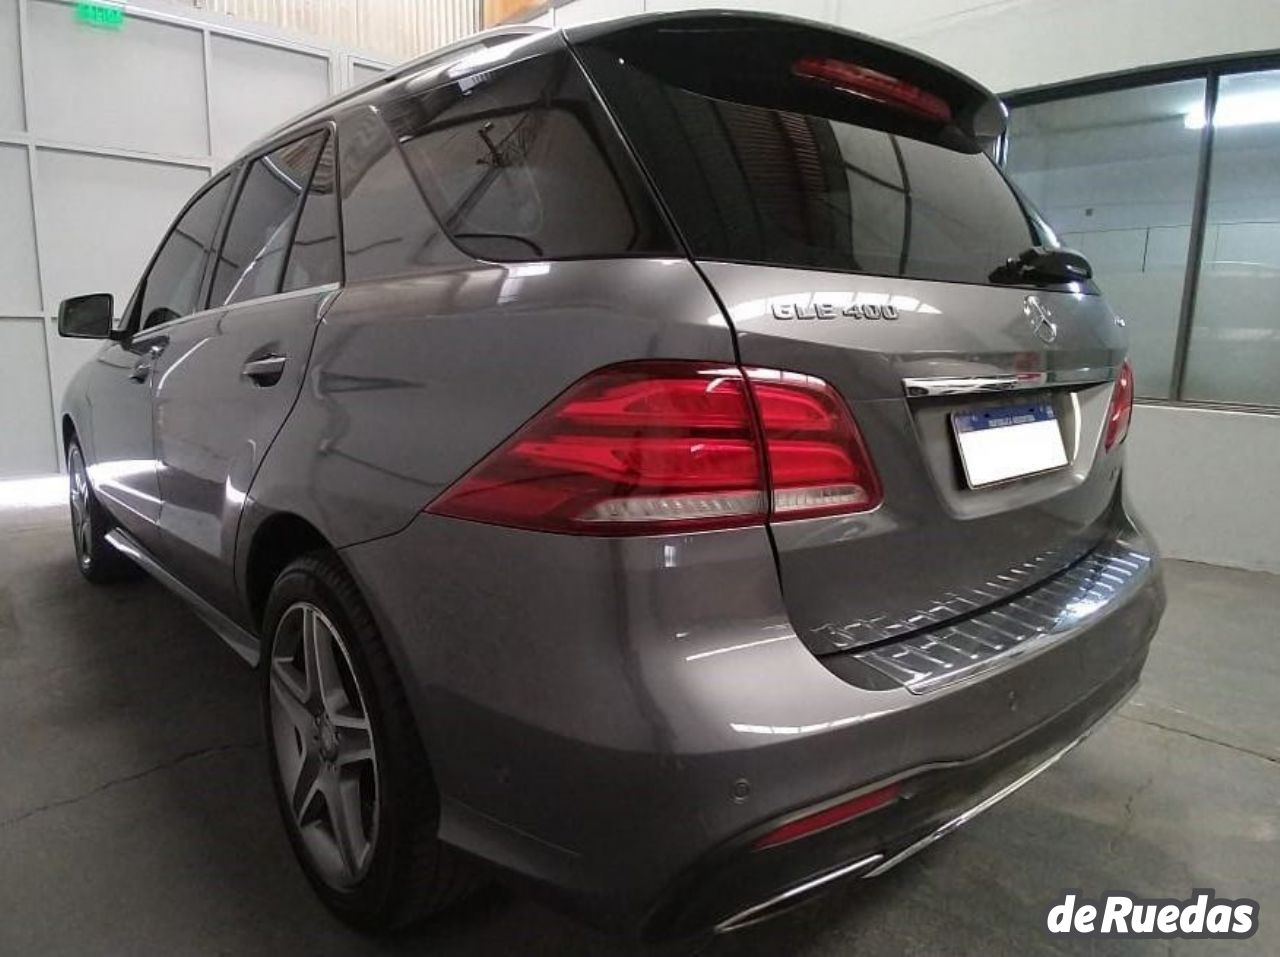 Mercedes Benz Clase GLE Usado en Mendoza, deRuedas